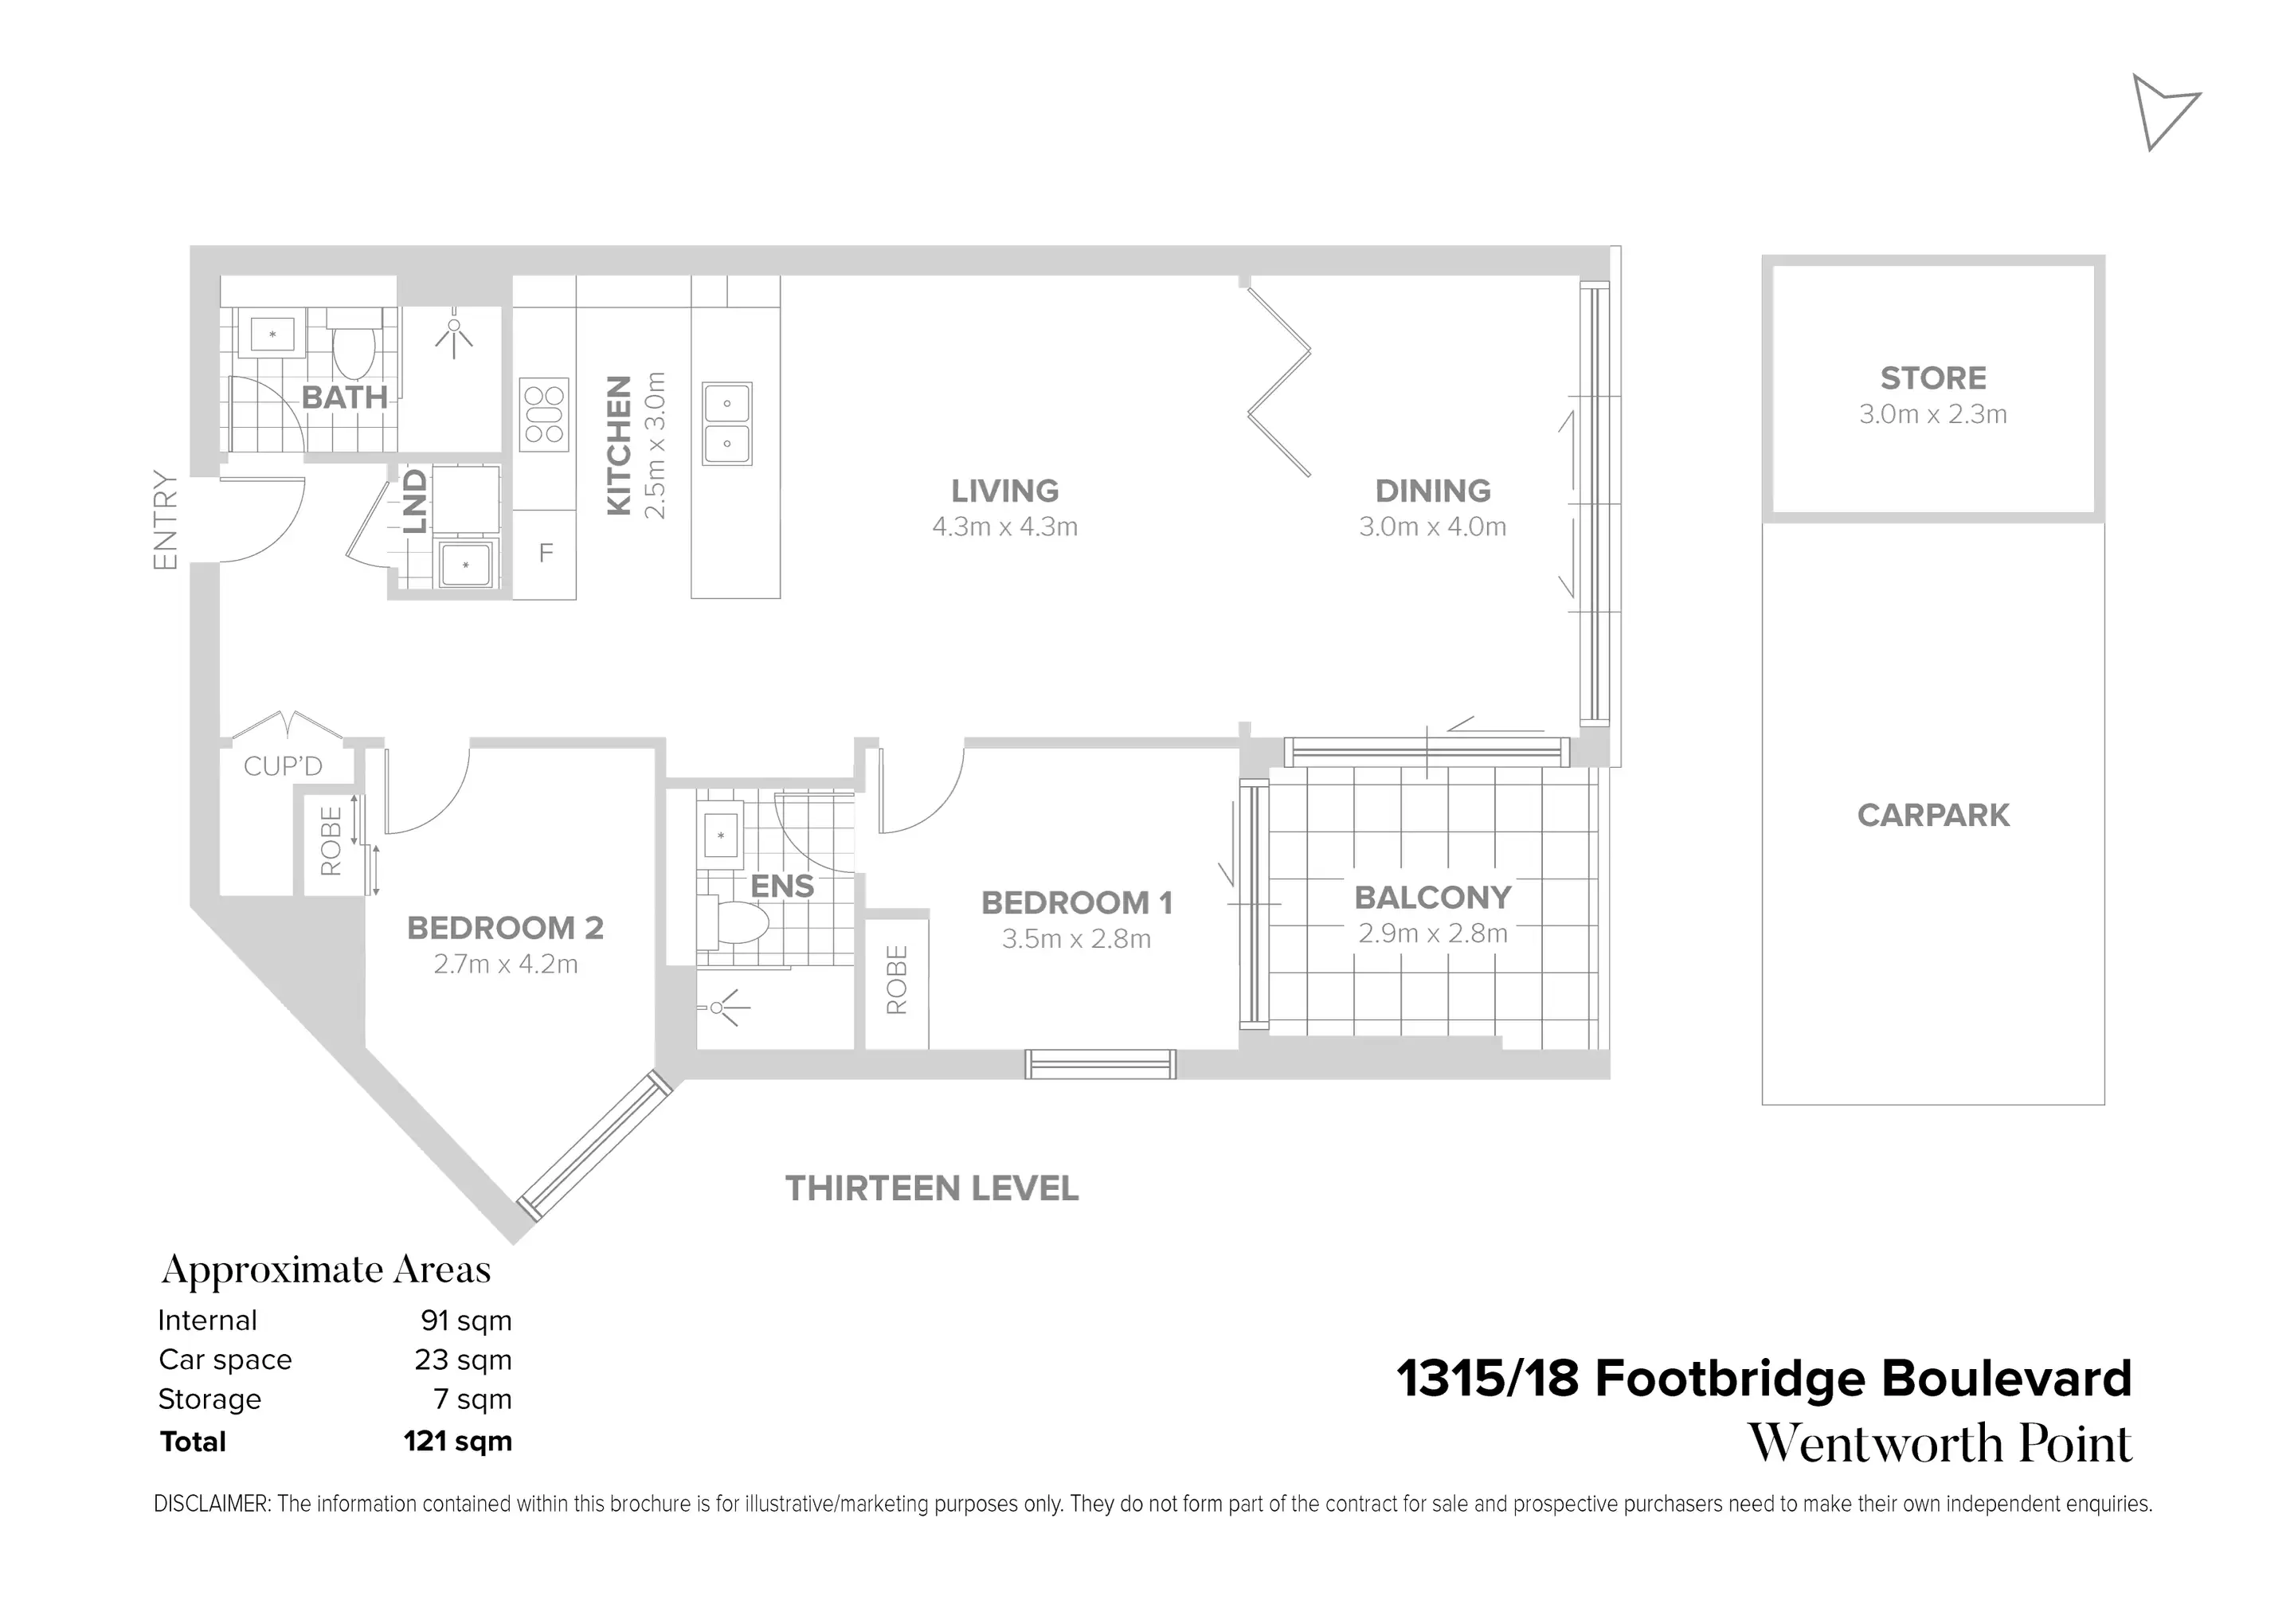 1315/18 Footbridge Boulevard, Wentworth Point Sold by Chidiac Realty - floorplan